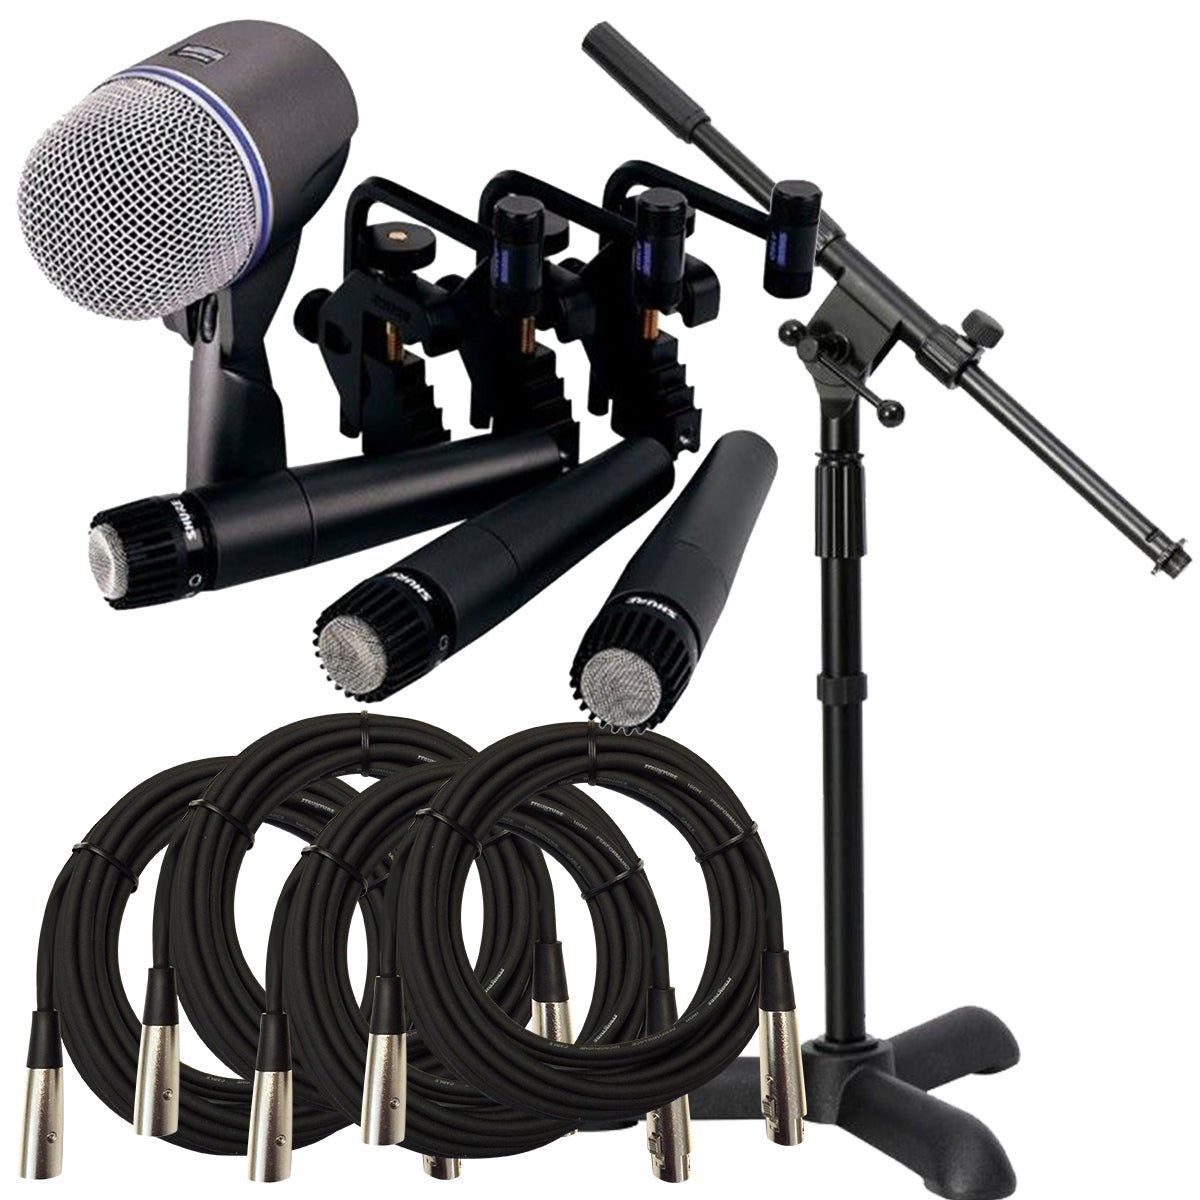 DMK57-52 - DMK57-52 Drum Microphone Kit - Shure USA